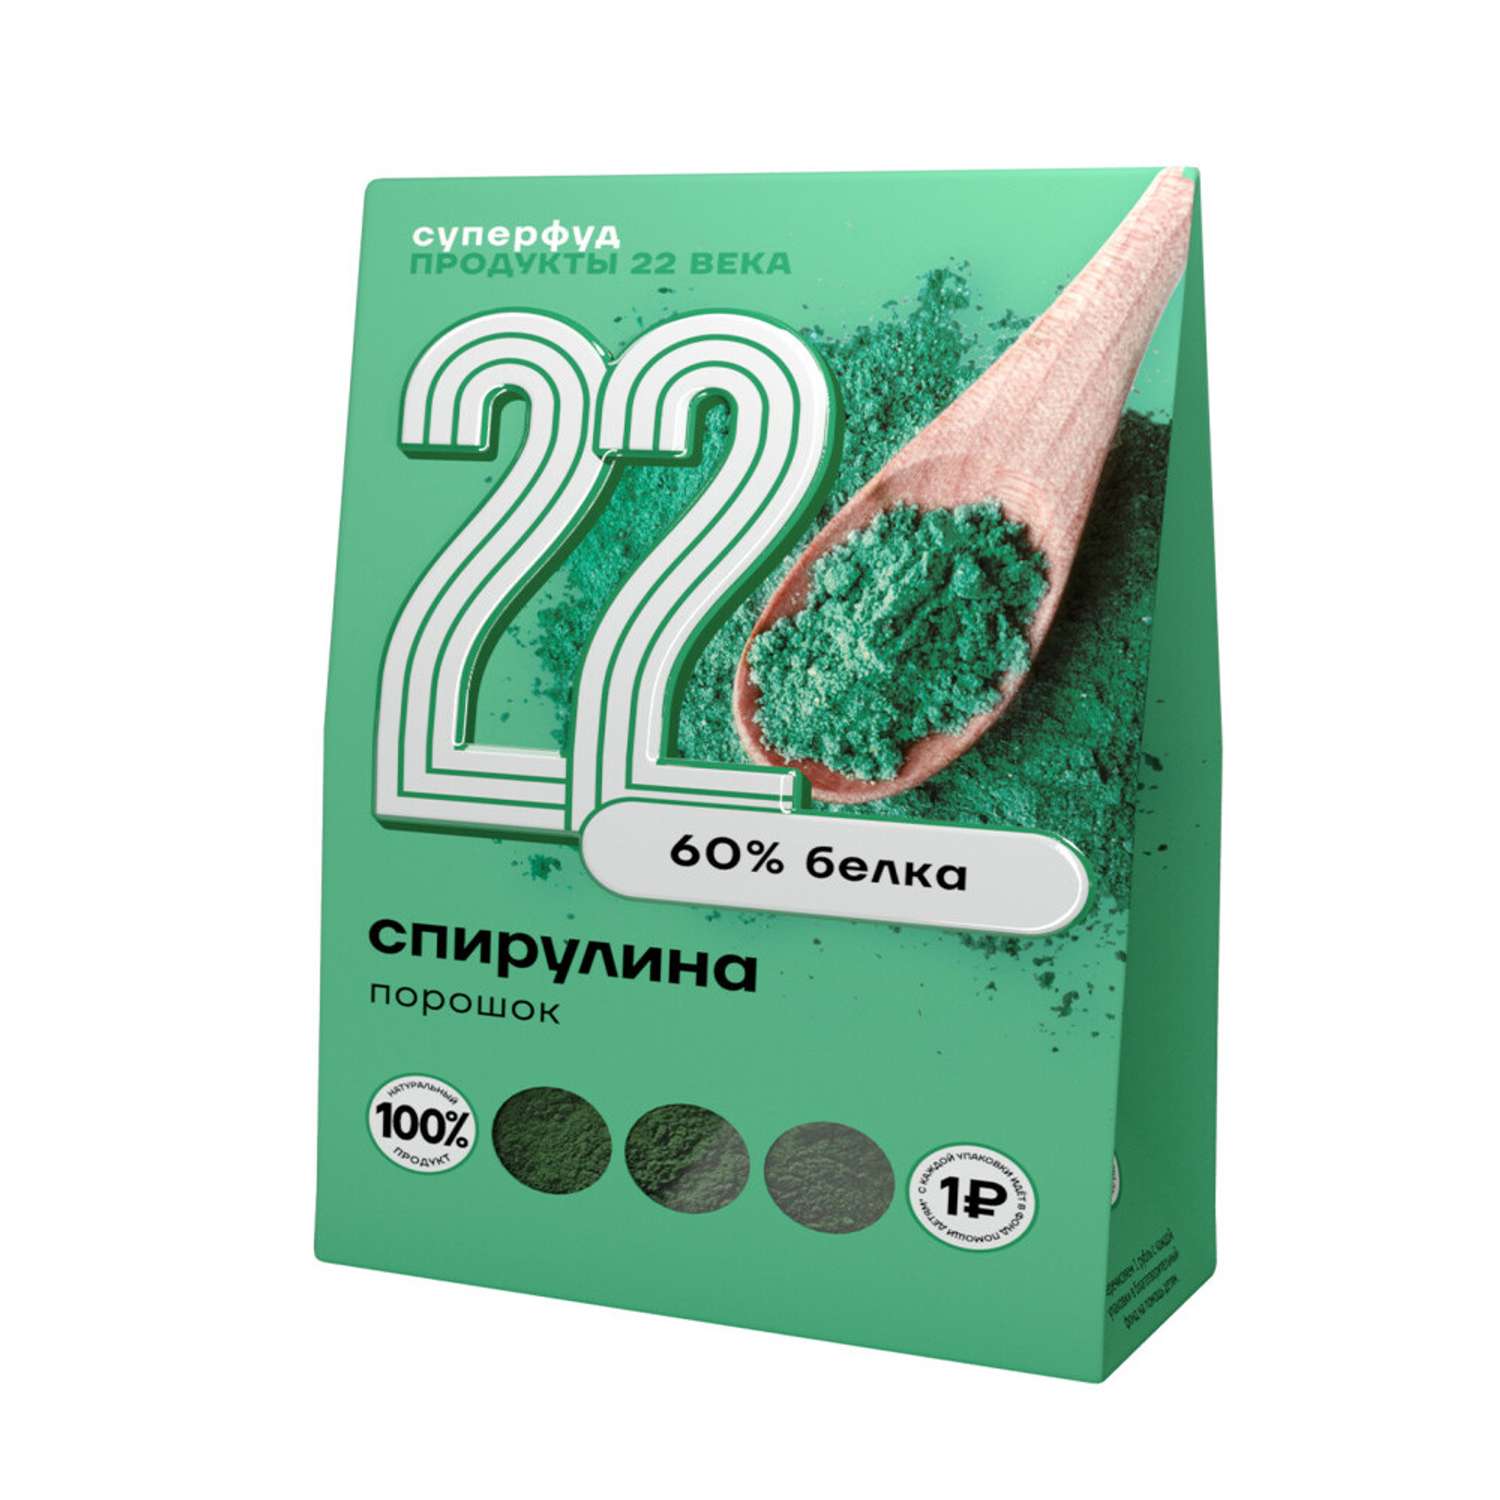 Product 22 ru